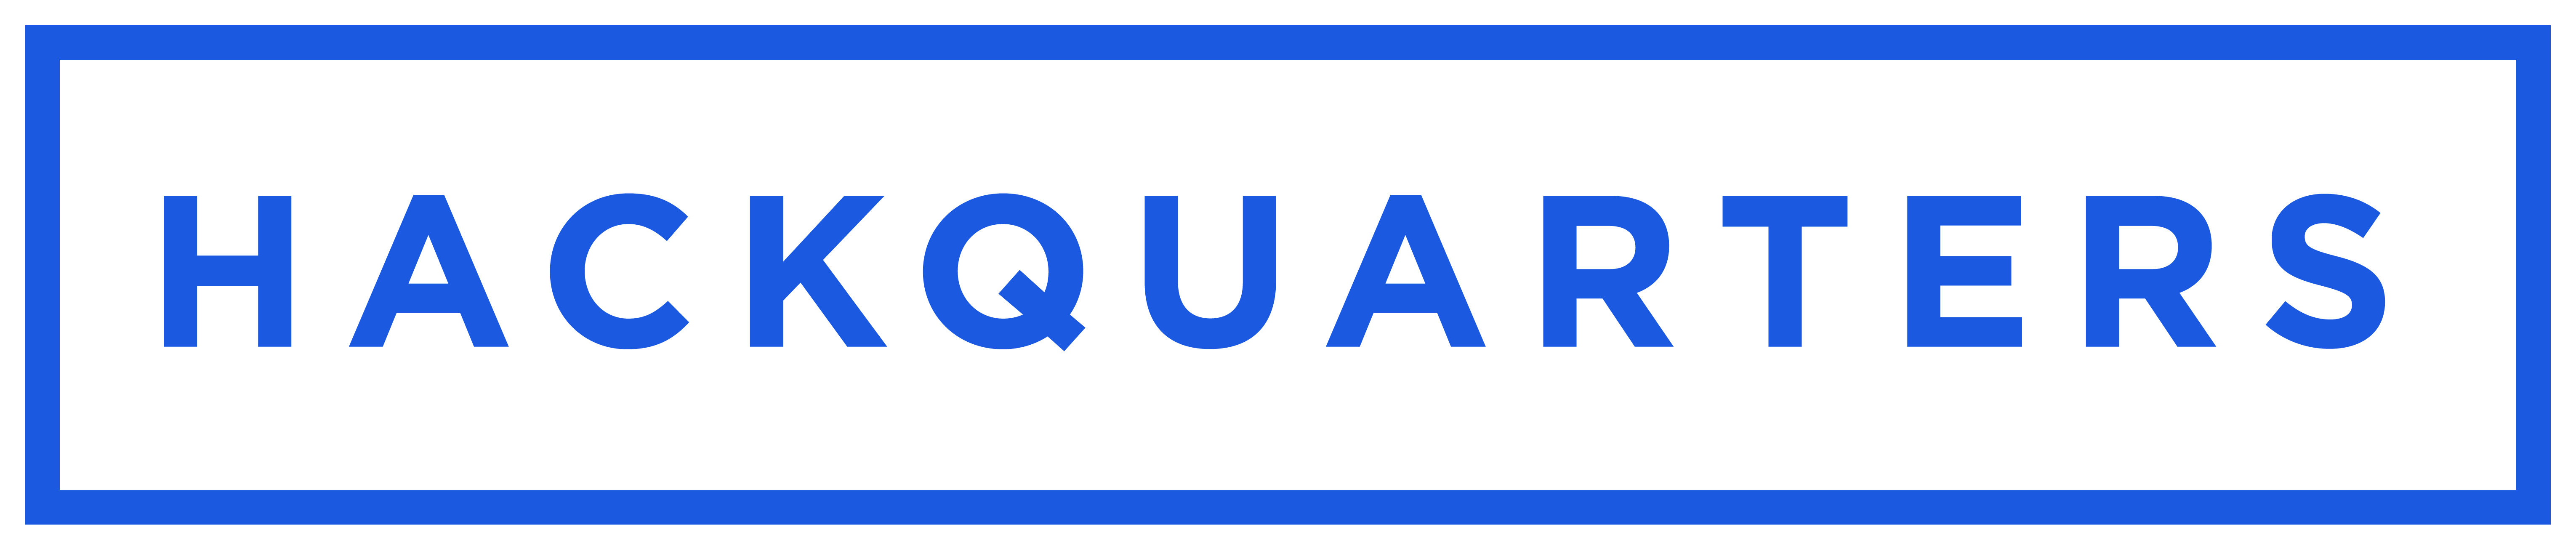 hackquarters-blue-logo-1.png